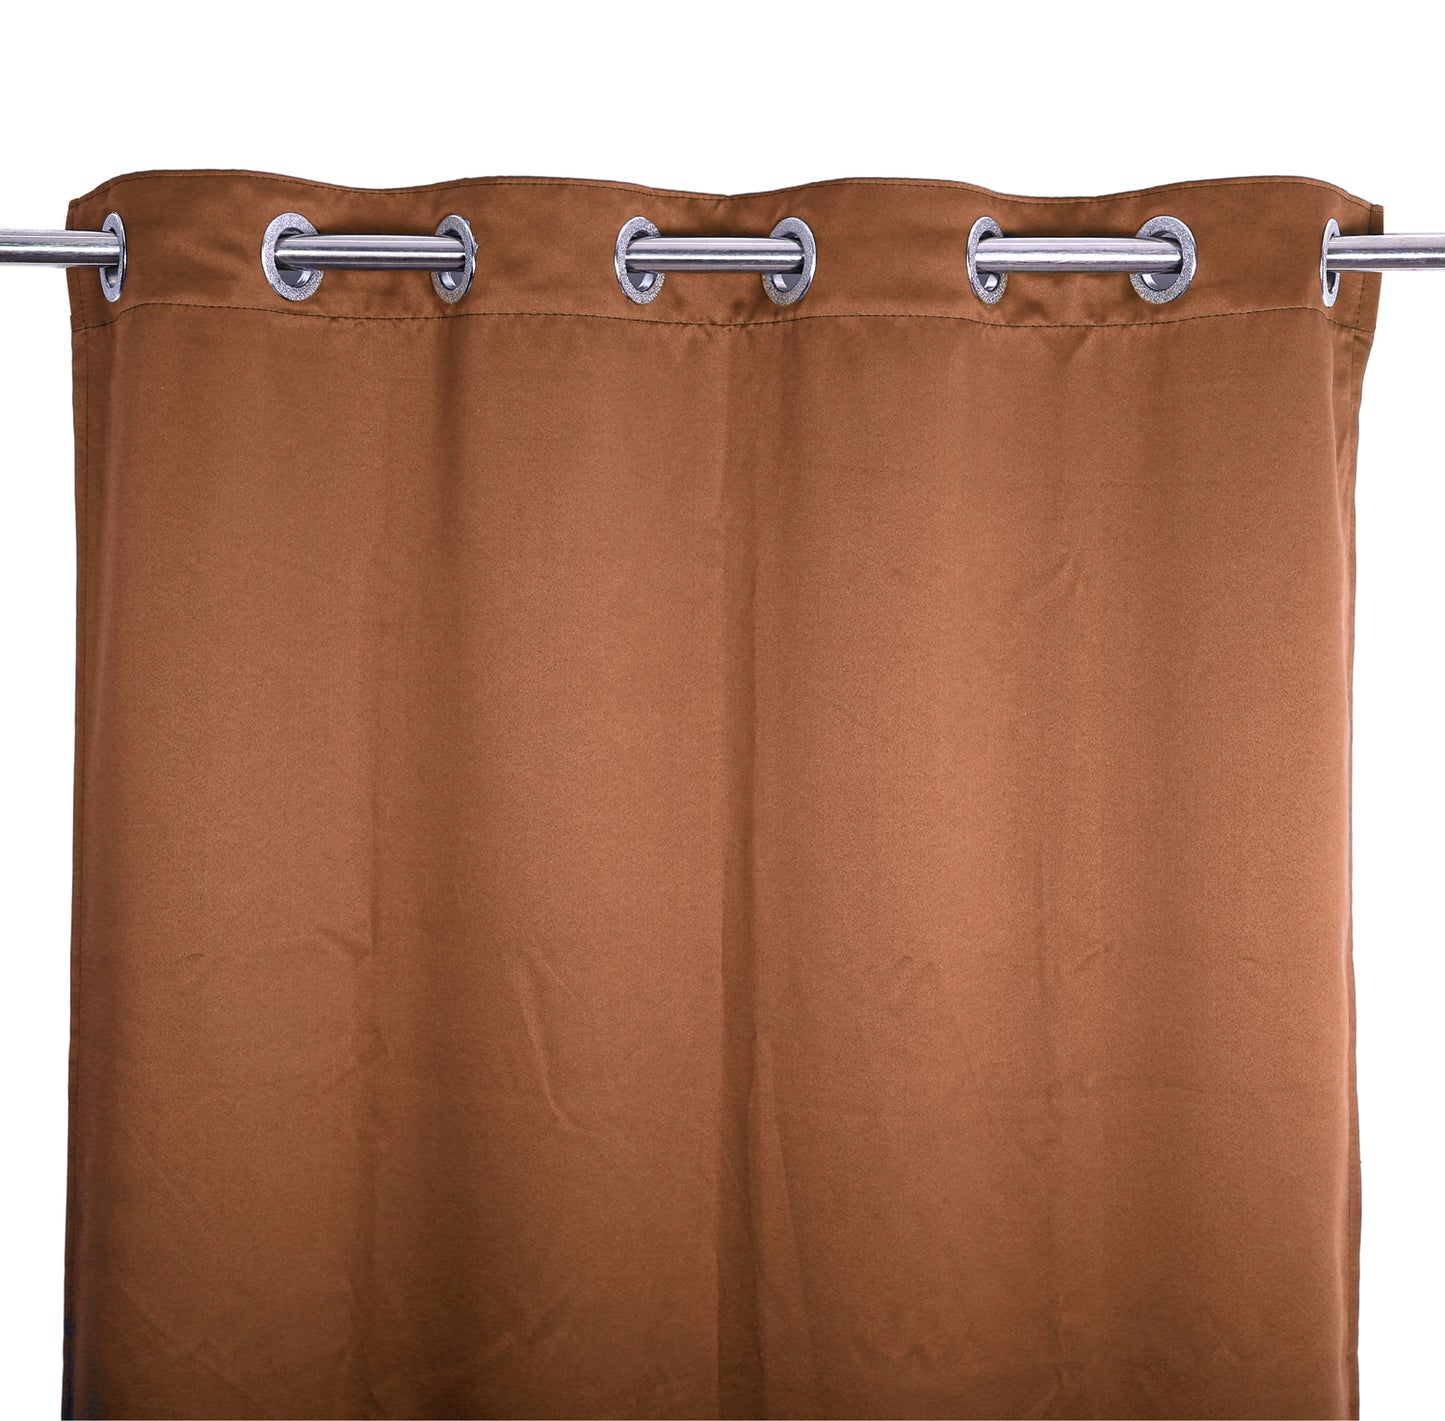 Blackout Plain Curtain - Caramel Brown (Pack of 1)